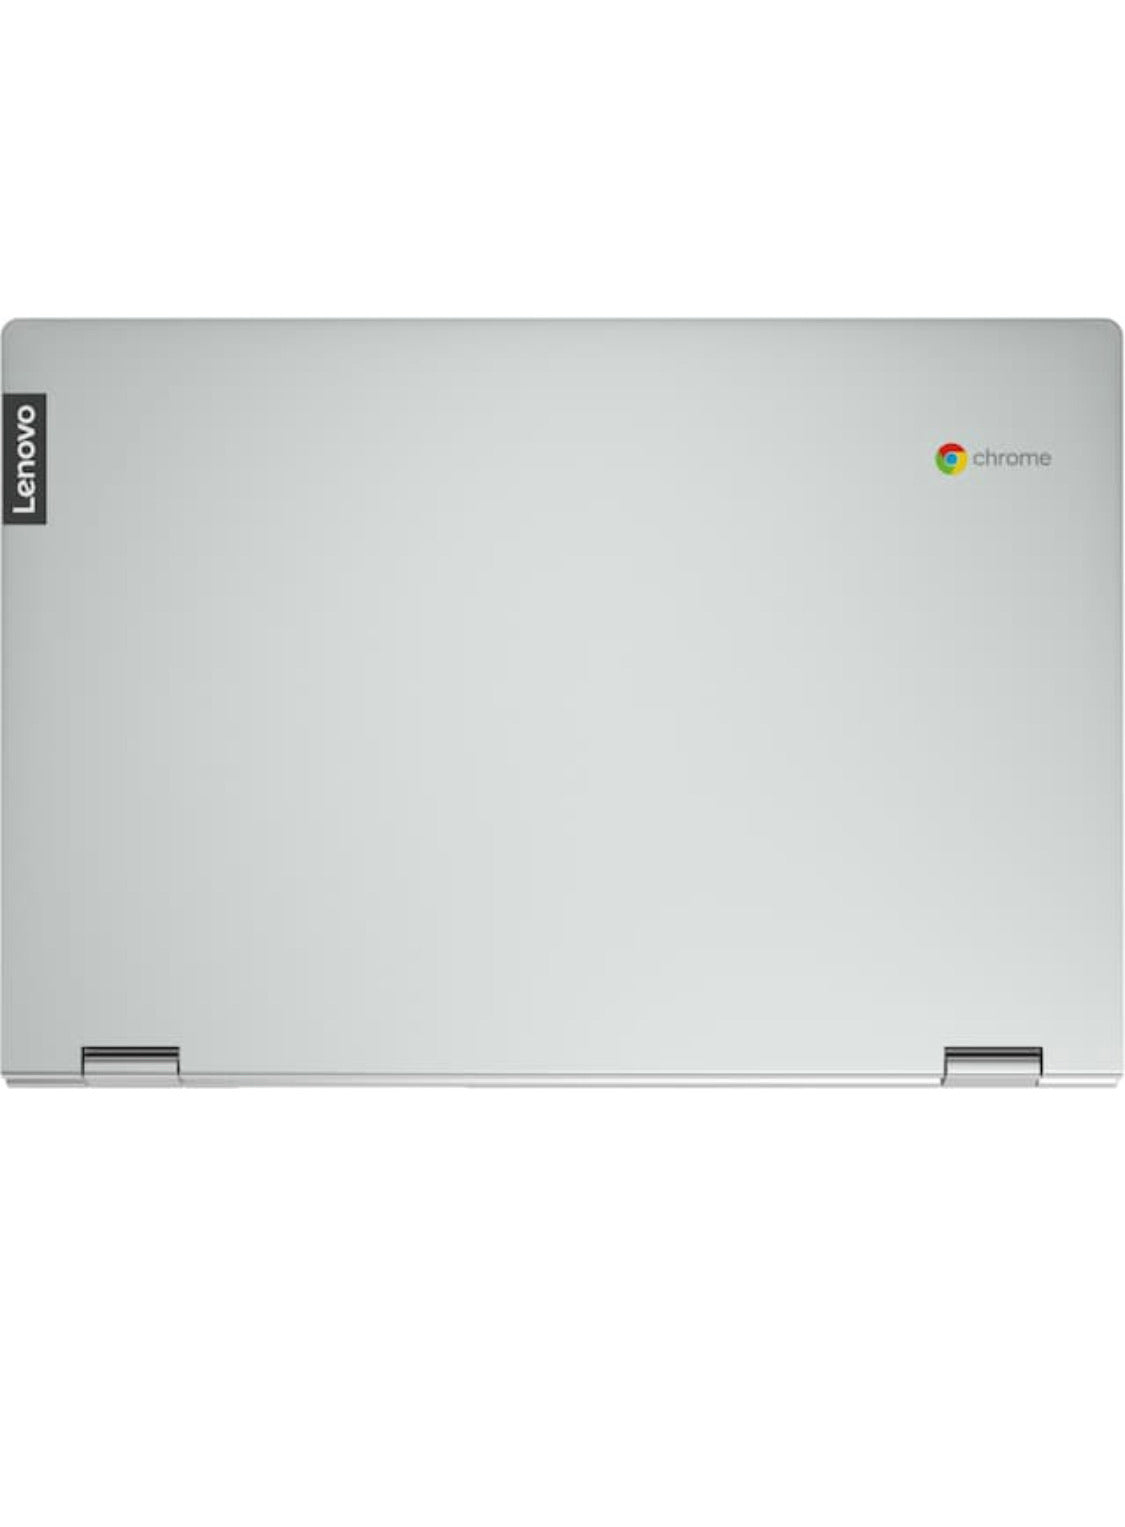 Lenovo - C340-15 2 in 1 15.6 “  Touch Screen  Chromebook- Intel Core 3- 4 GB Memory - 64 GB eMMC  Flash Memory- Mineral Gray